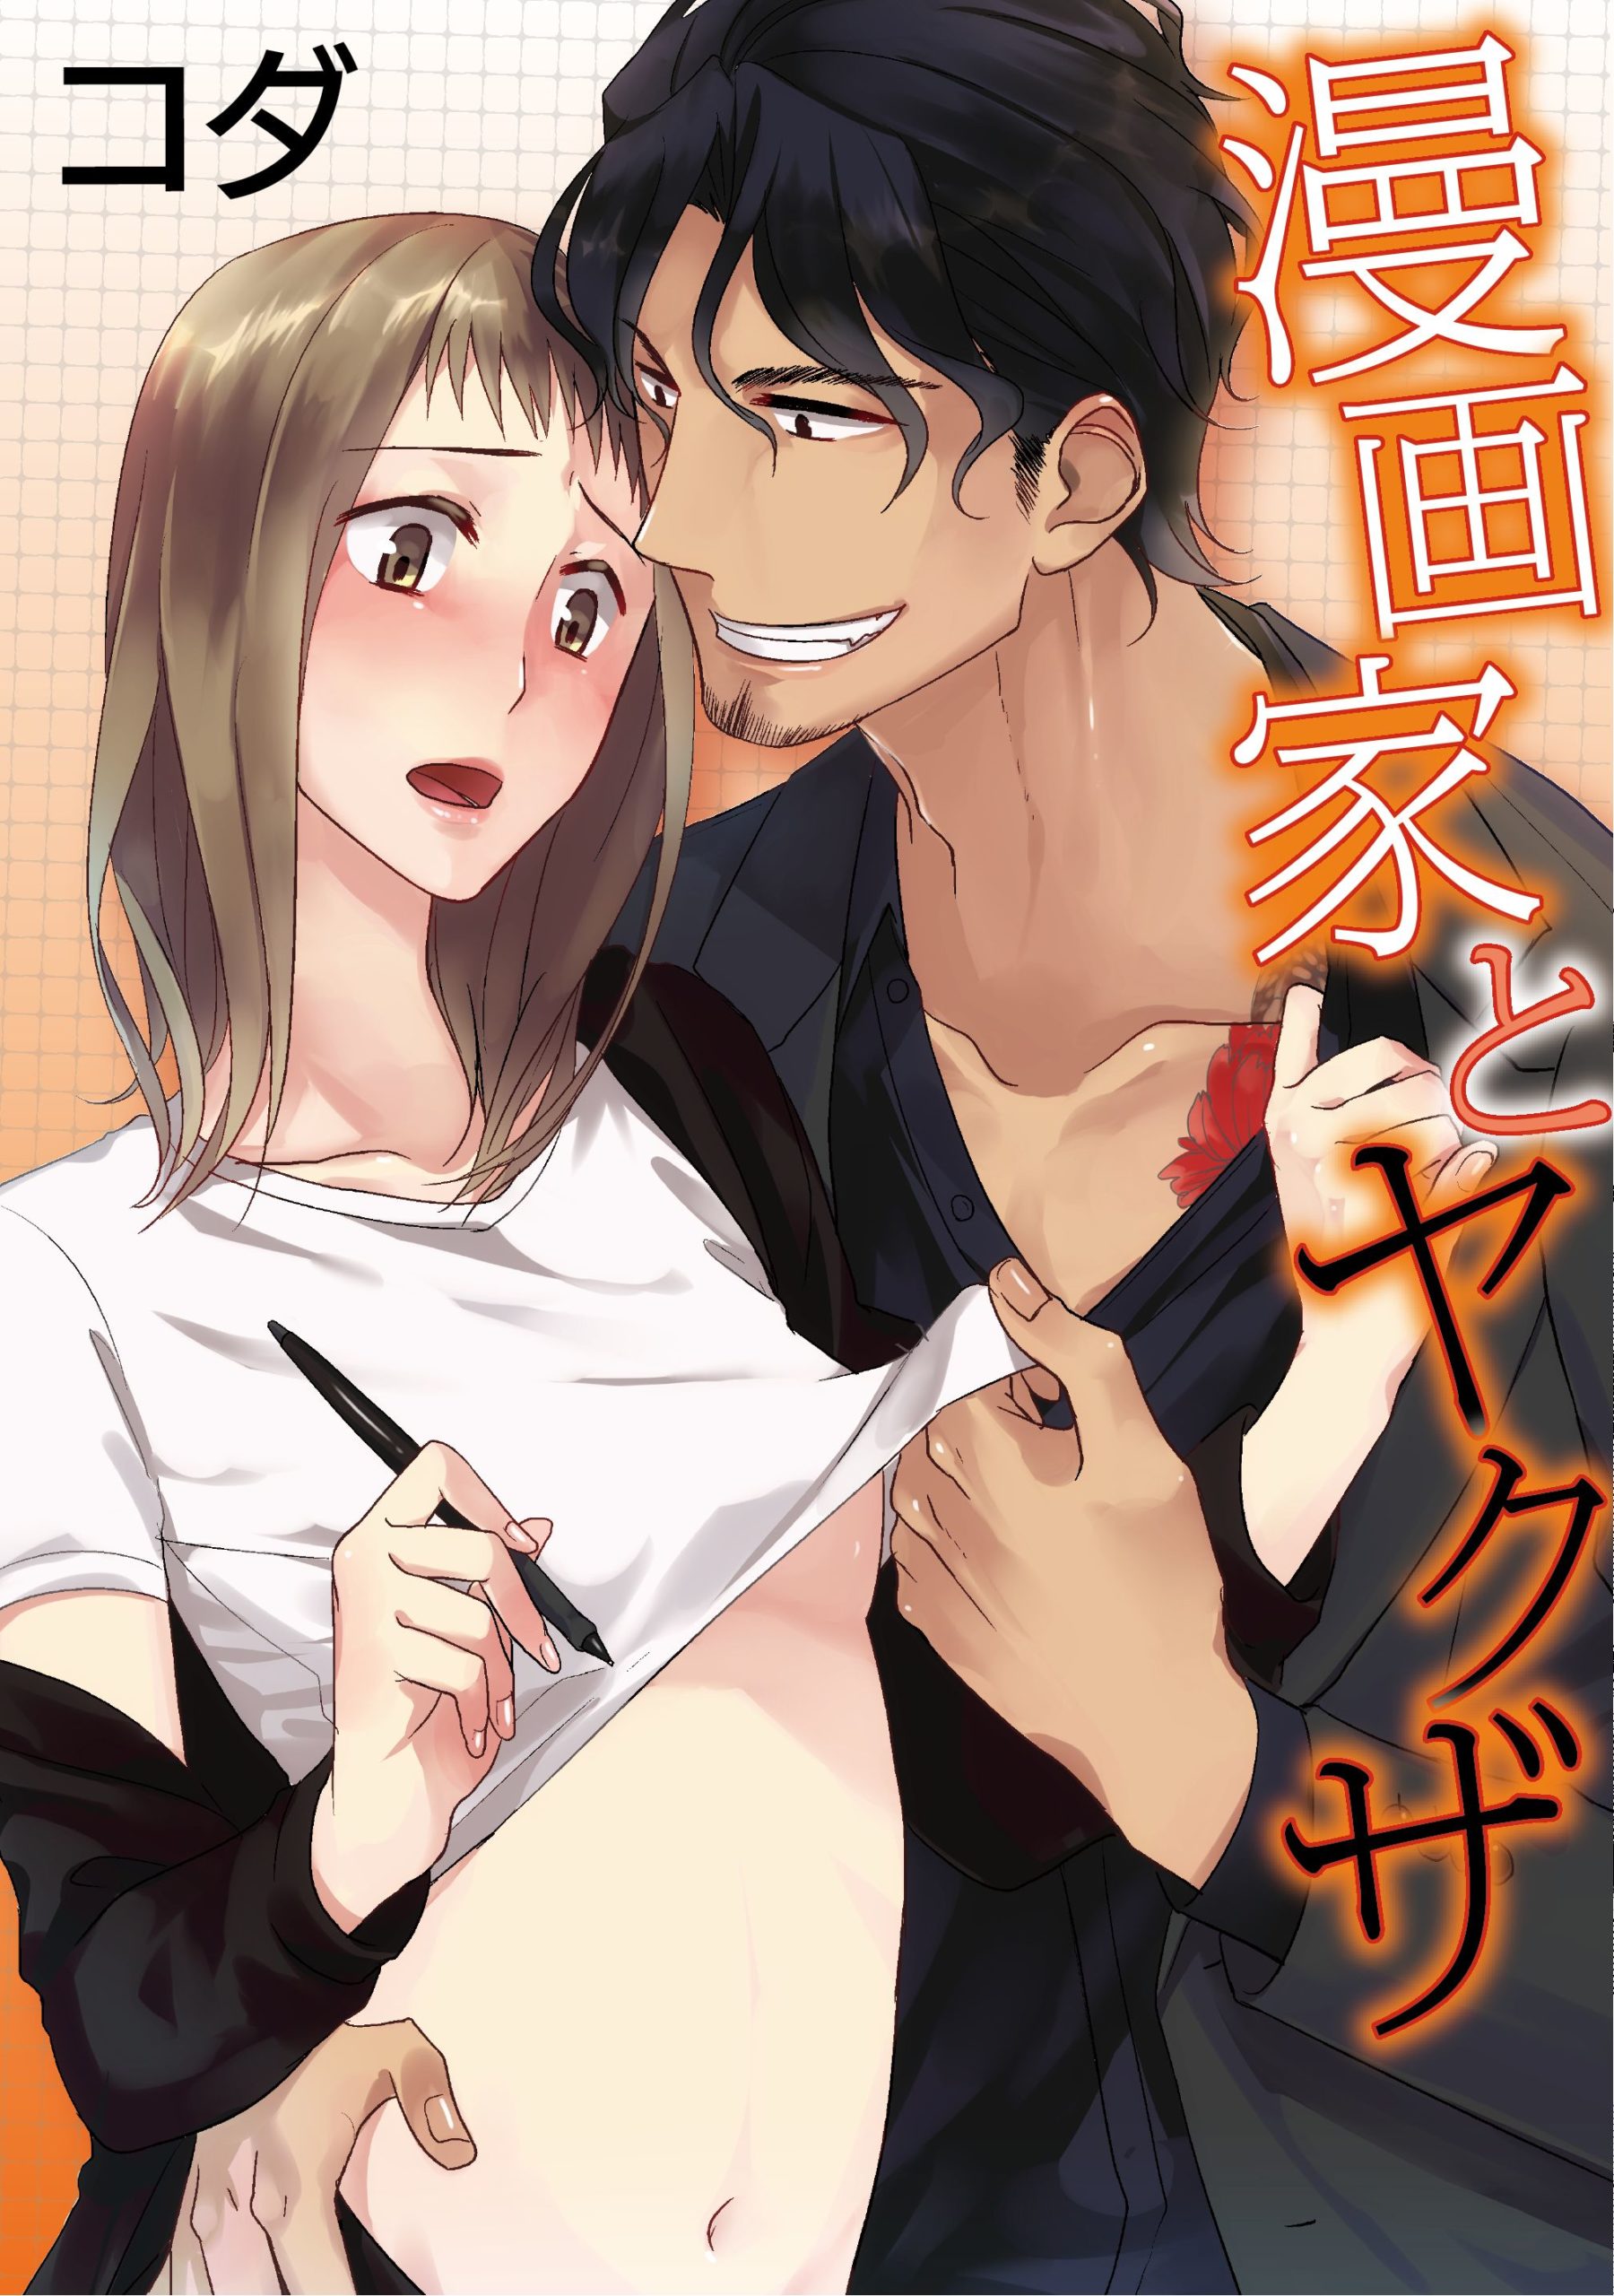 Mature adult manga